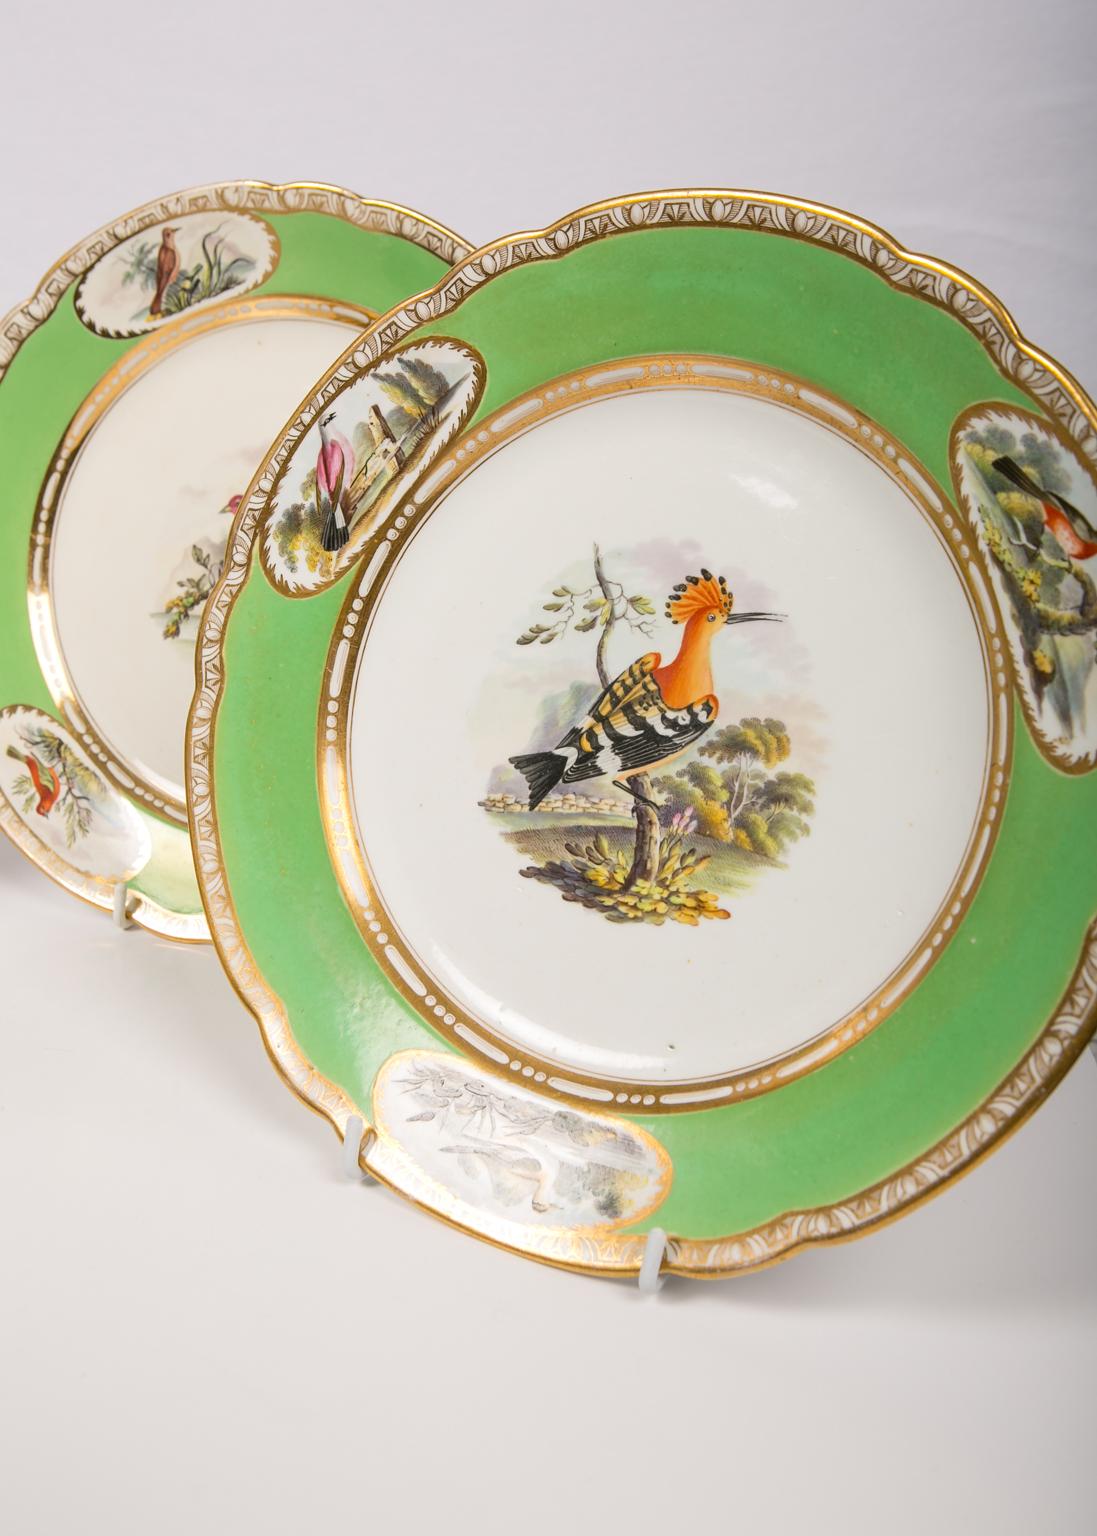 Regency Bird Lover's Set Antique Porcelain Dishes Hand Painted Apple Green Borders